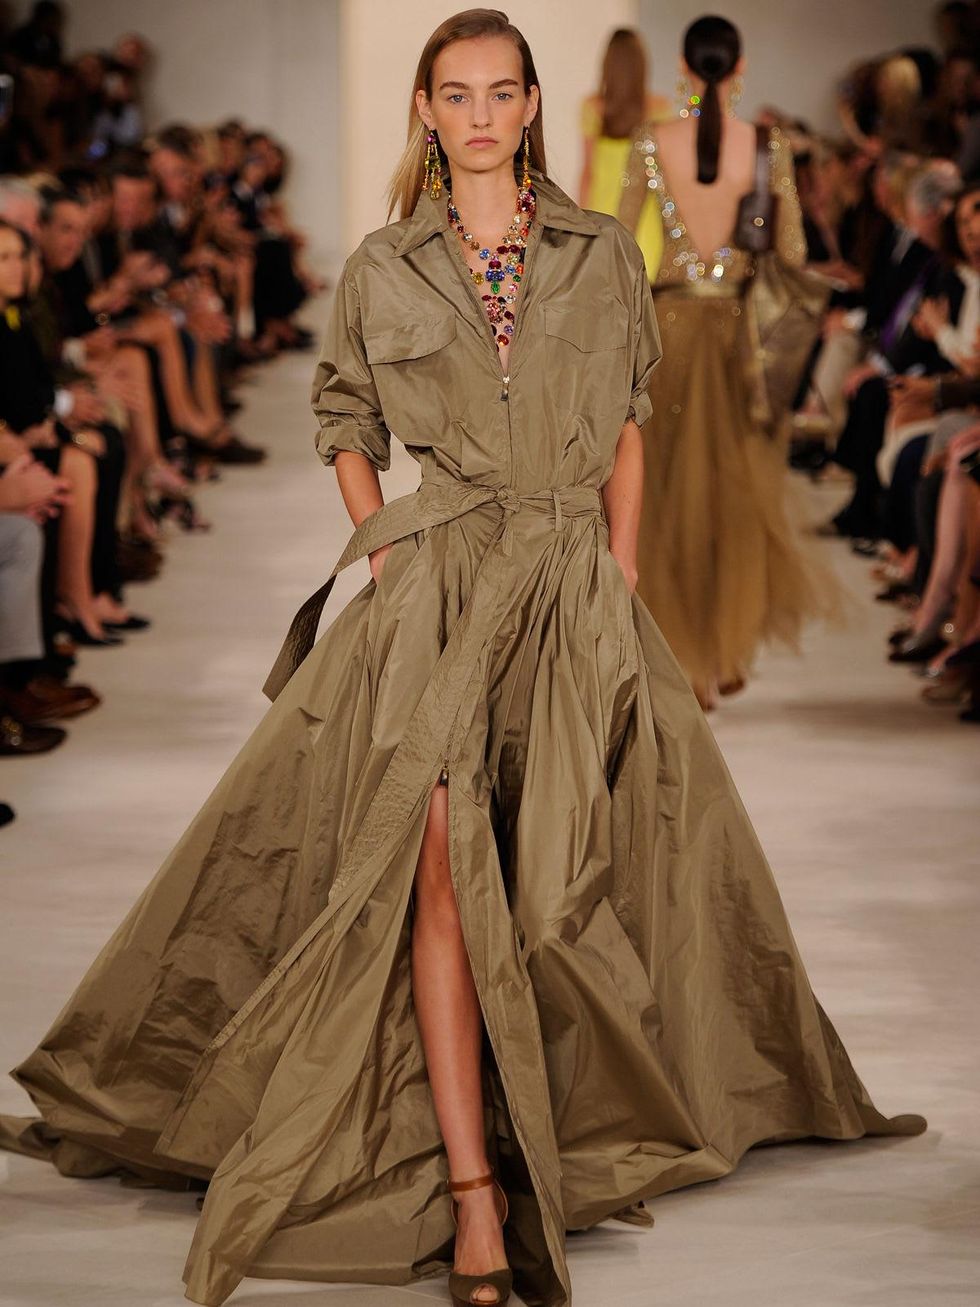 Fashion Week spring 2015 Ralph Lauren September 2014 safari coat dress